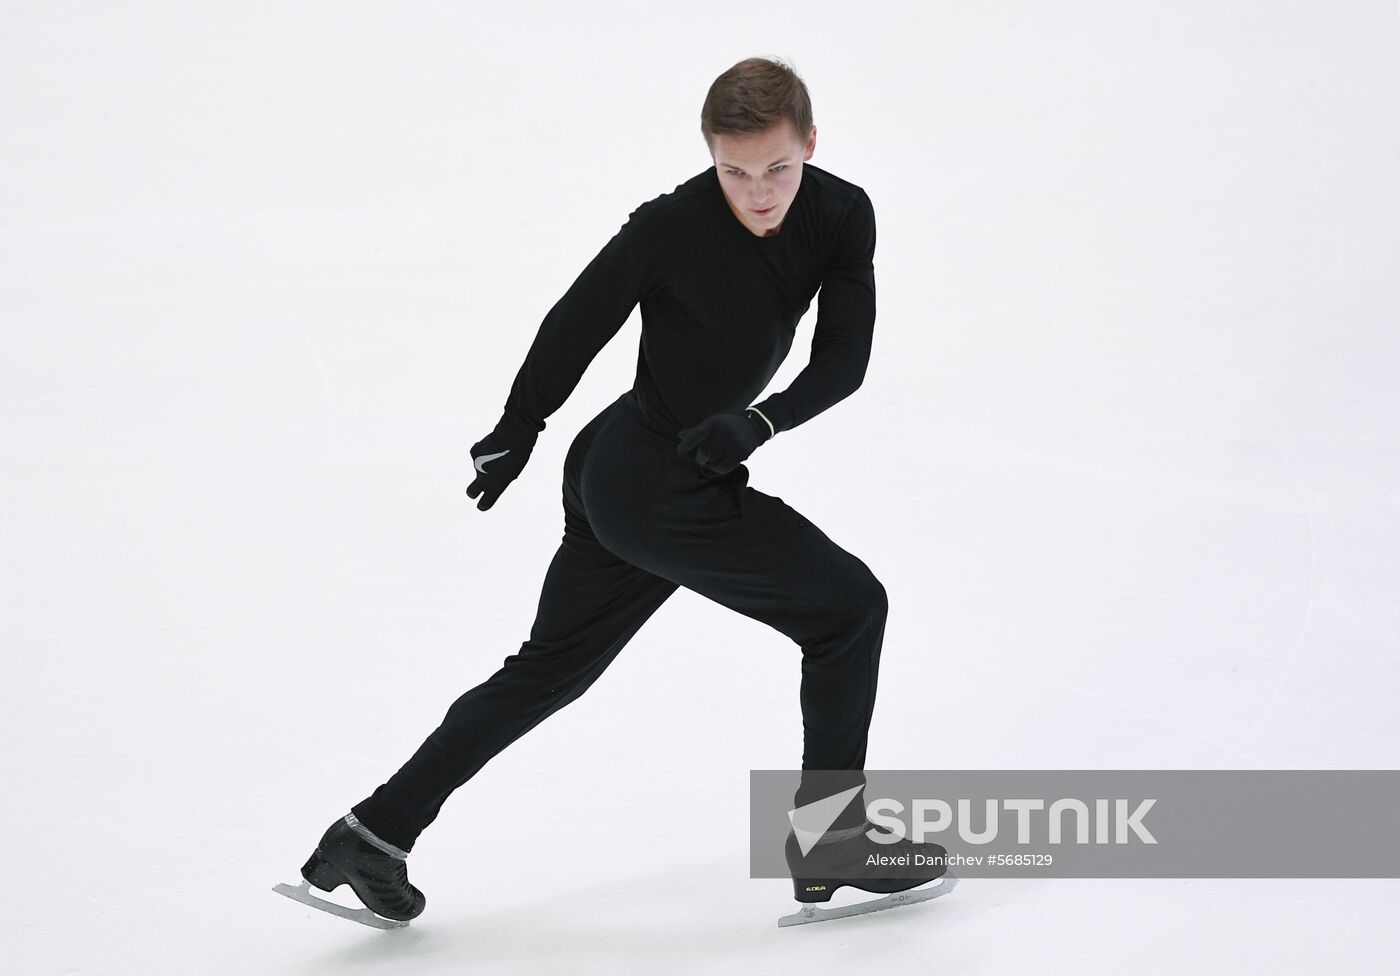 Finland Figure Skating 